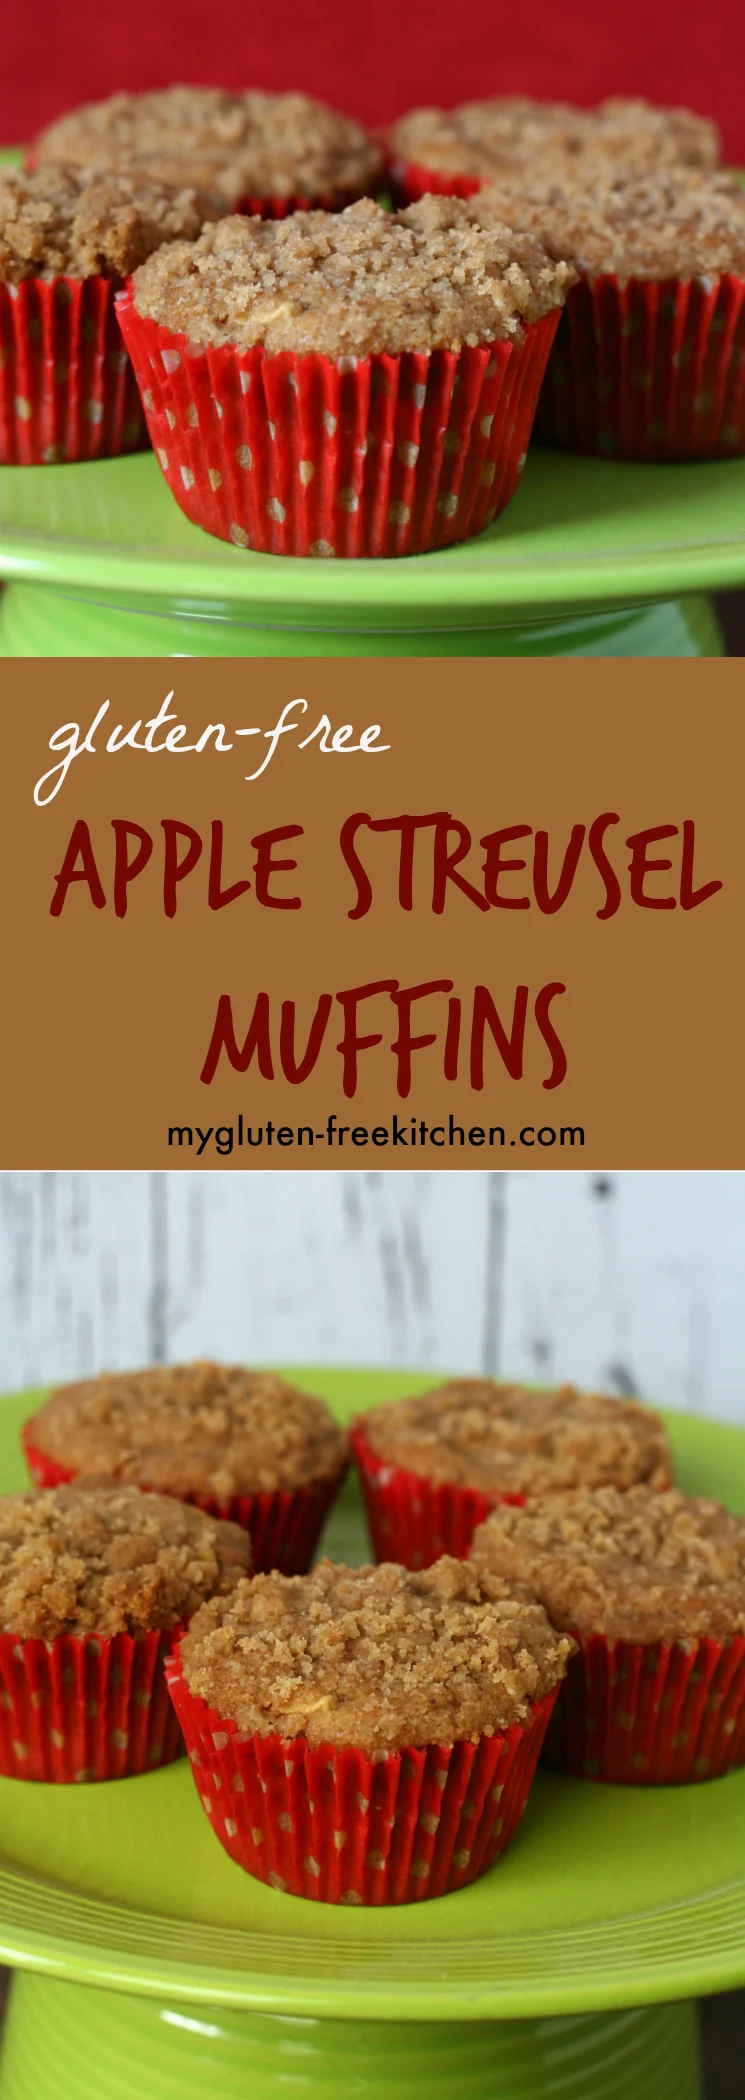 Gluten-free Apple Streusel Muffins Recipe. I love these!